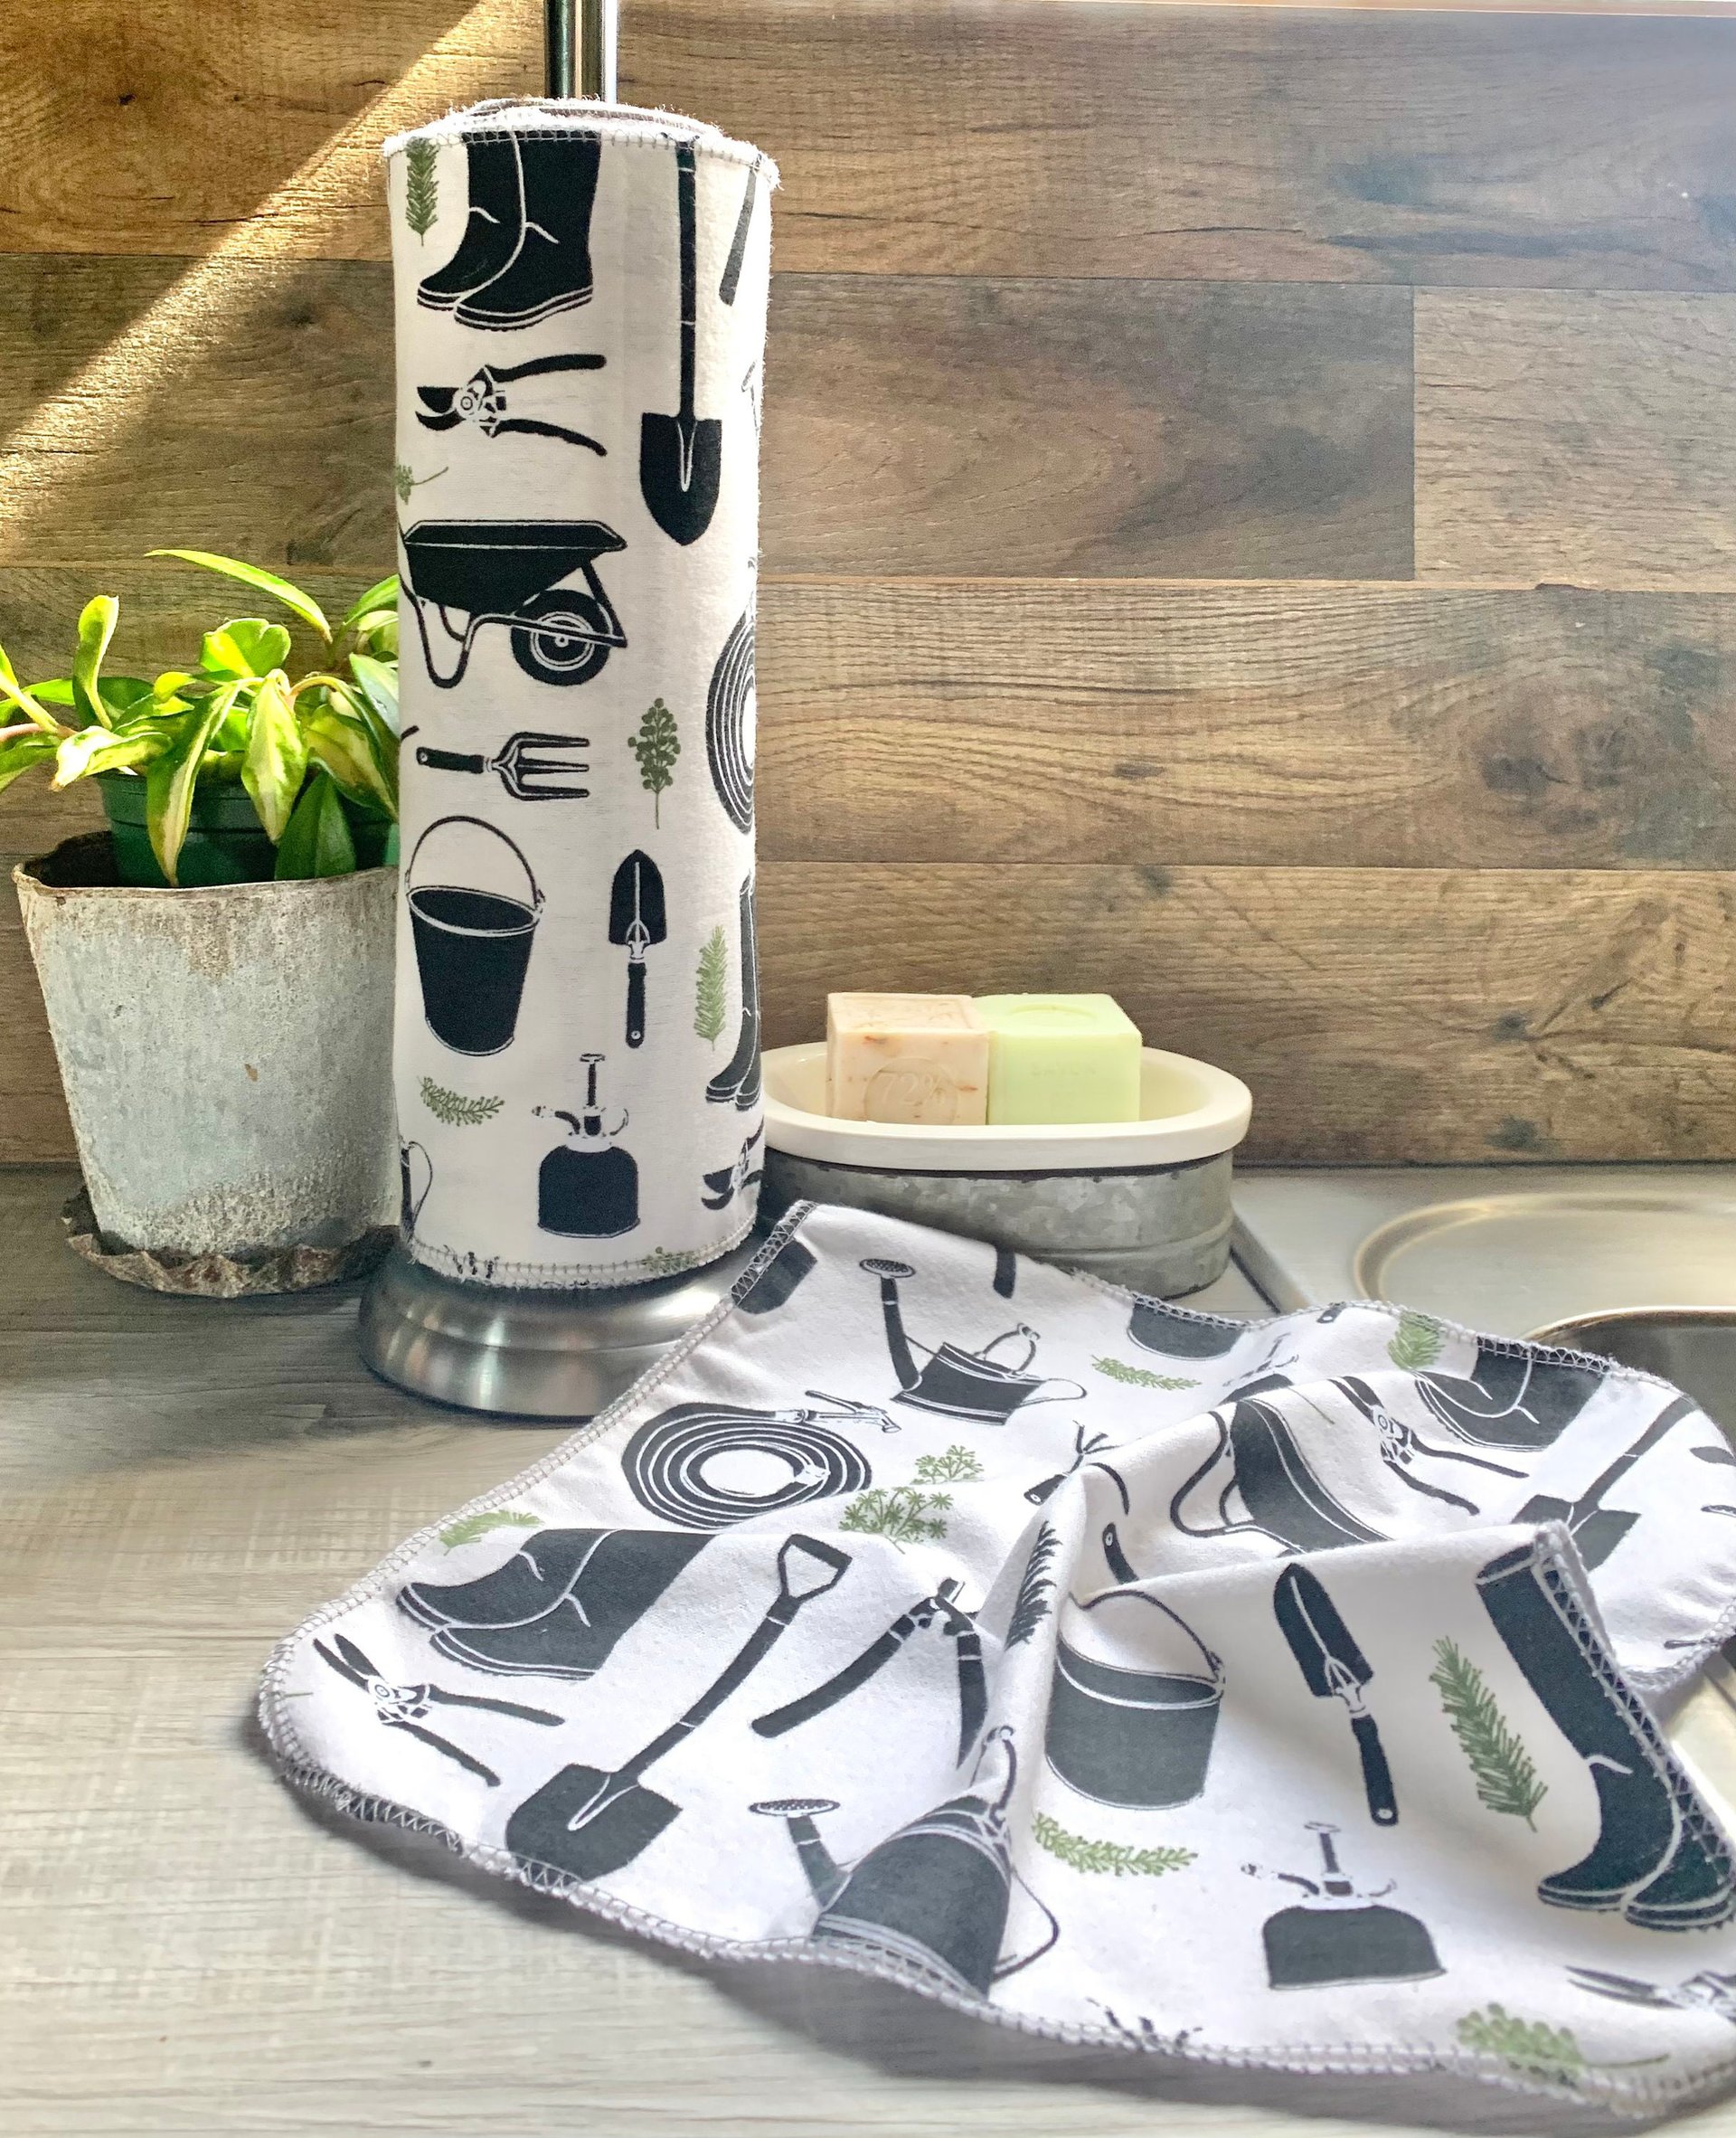 Gardening Tools Paperless Towels || Unpaper Towels || Eco Sustainable Zero Waste Kitchen